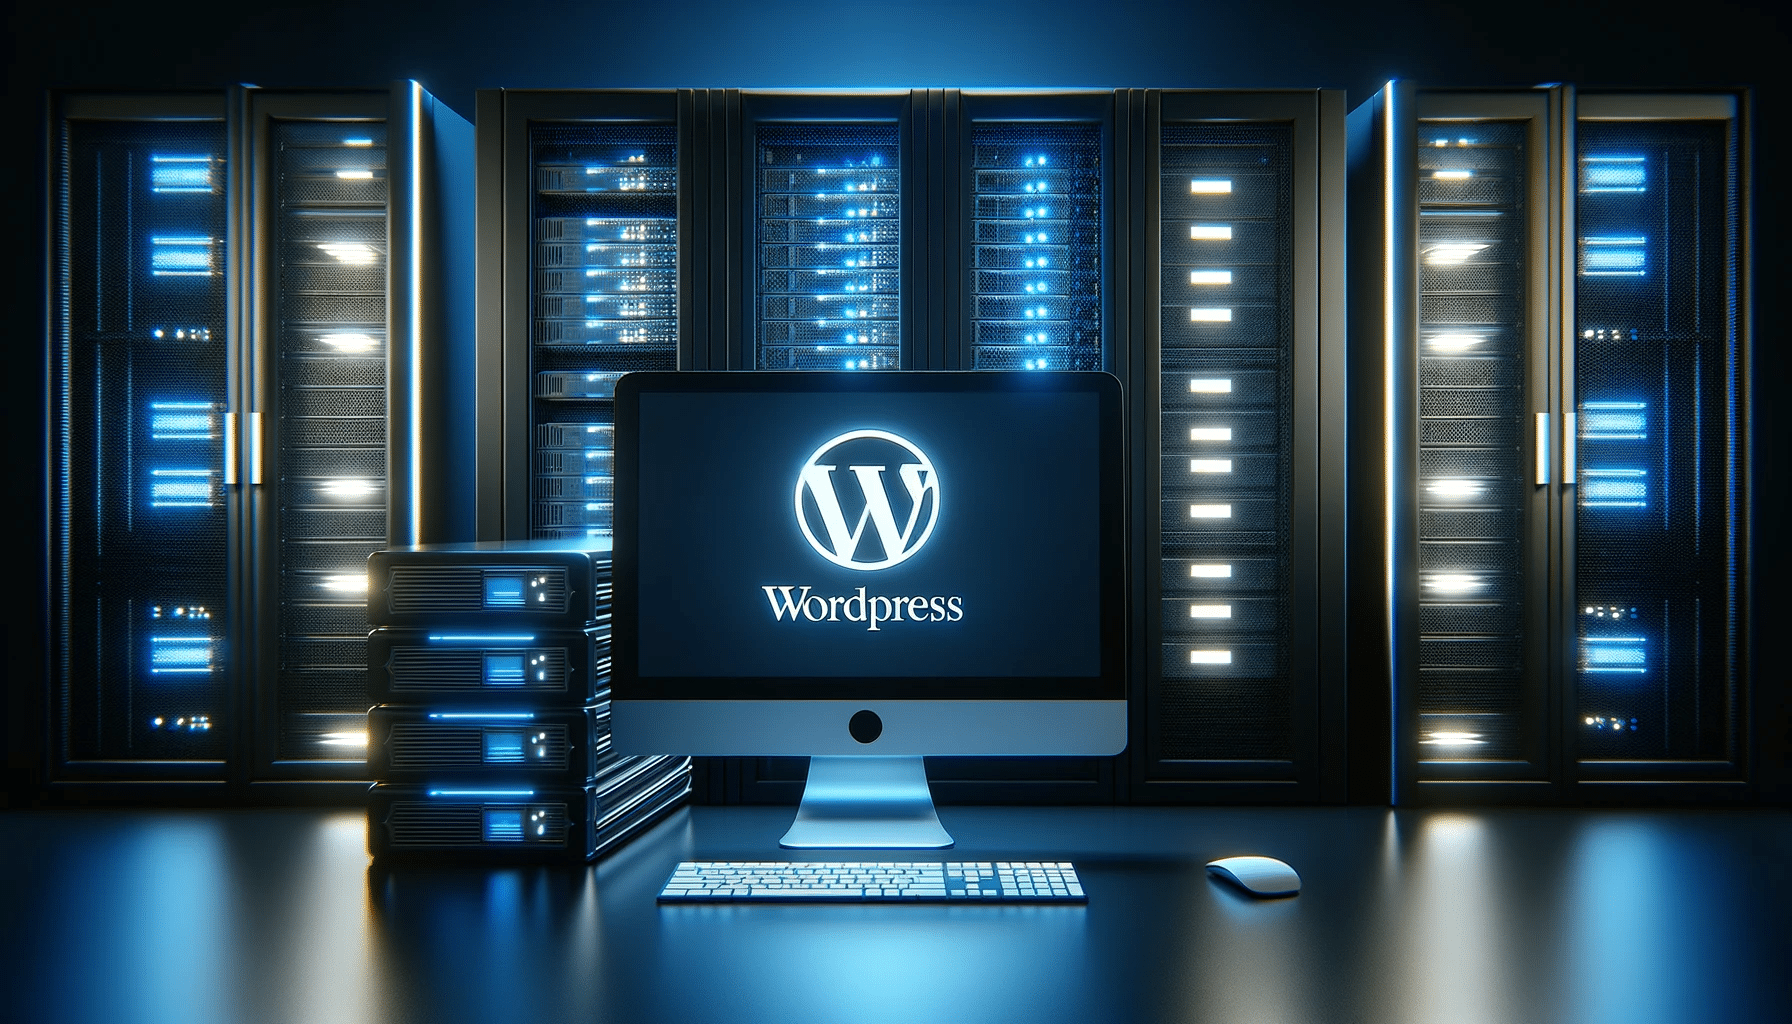 WordPress logo being displayed on a computer monitor.